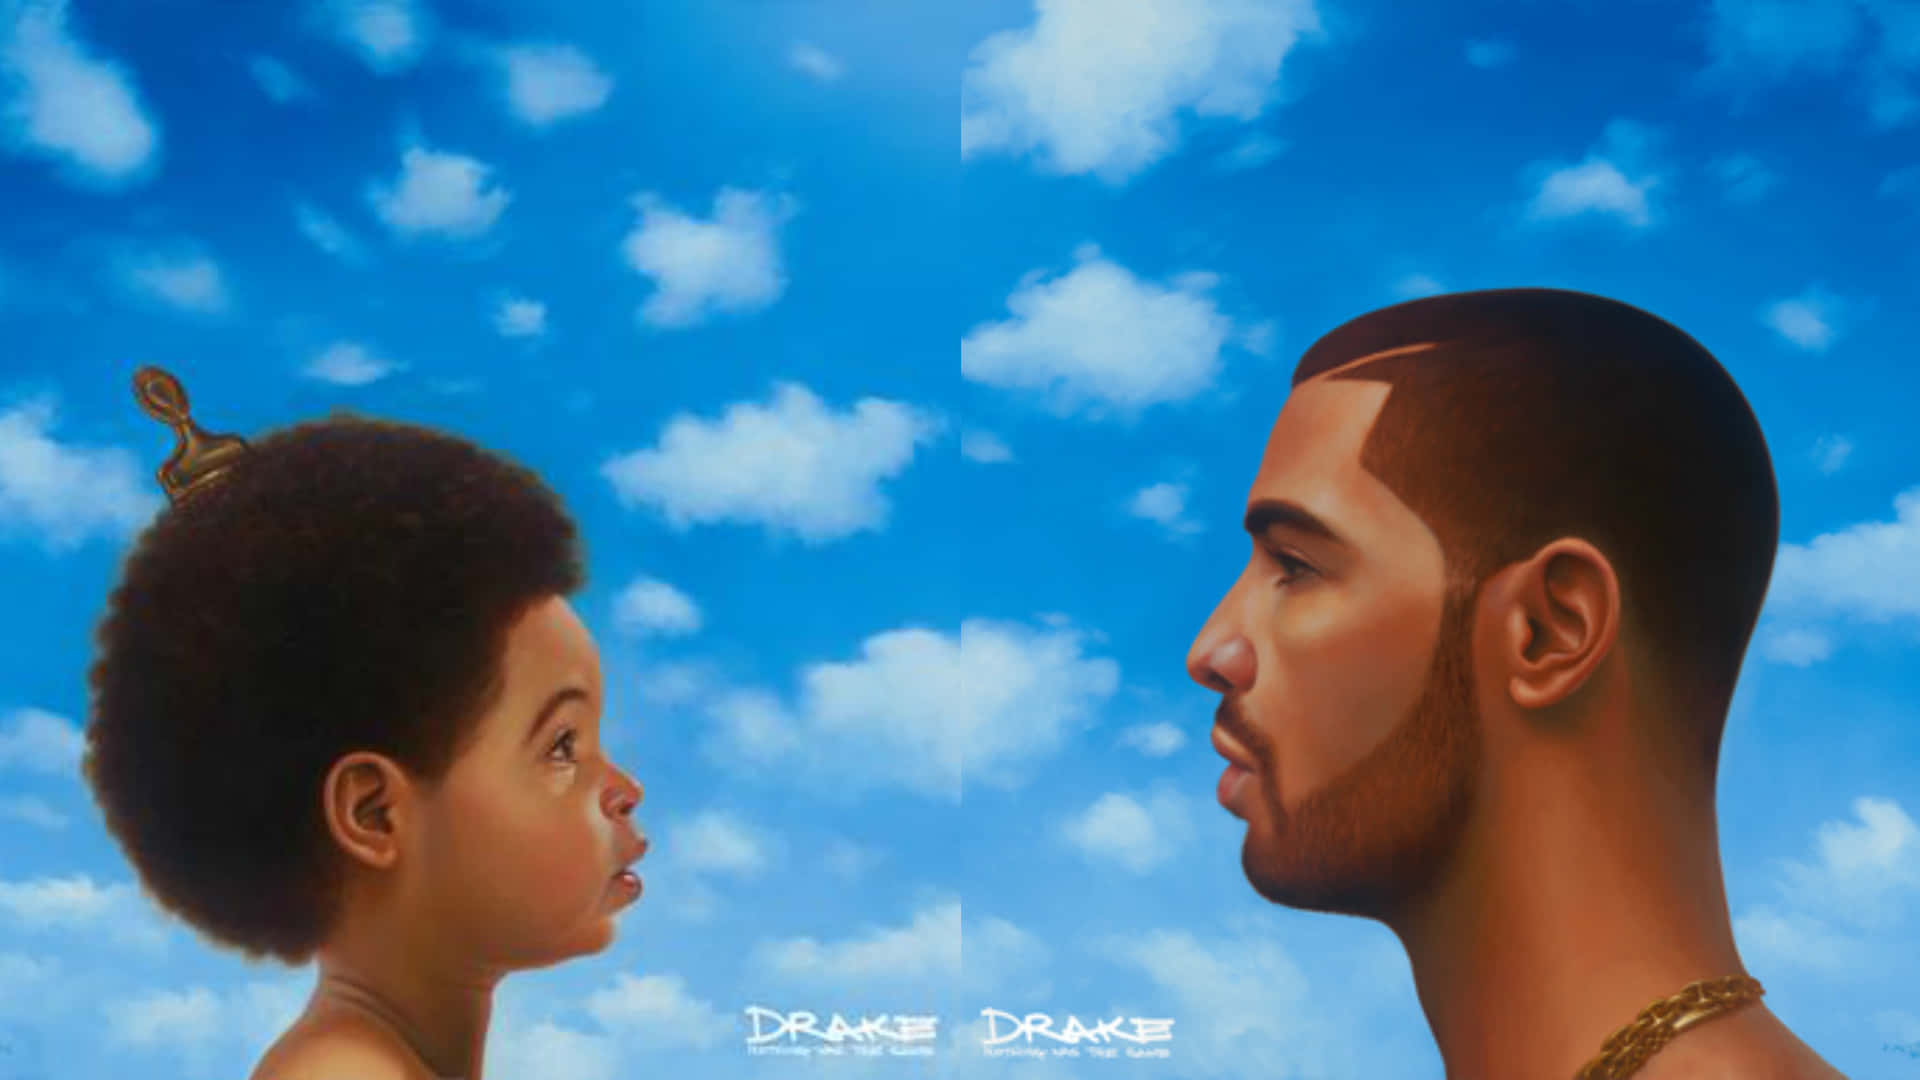 Drakepromovendo Seu Álbum 